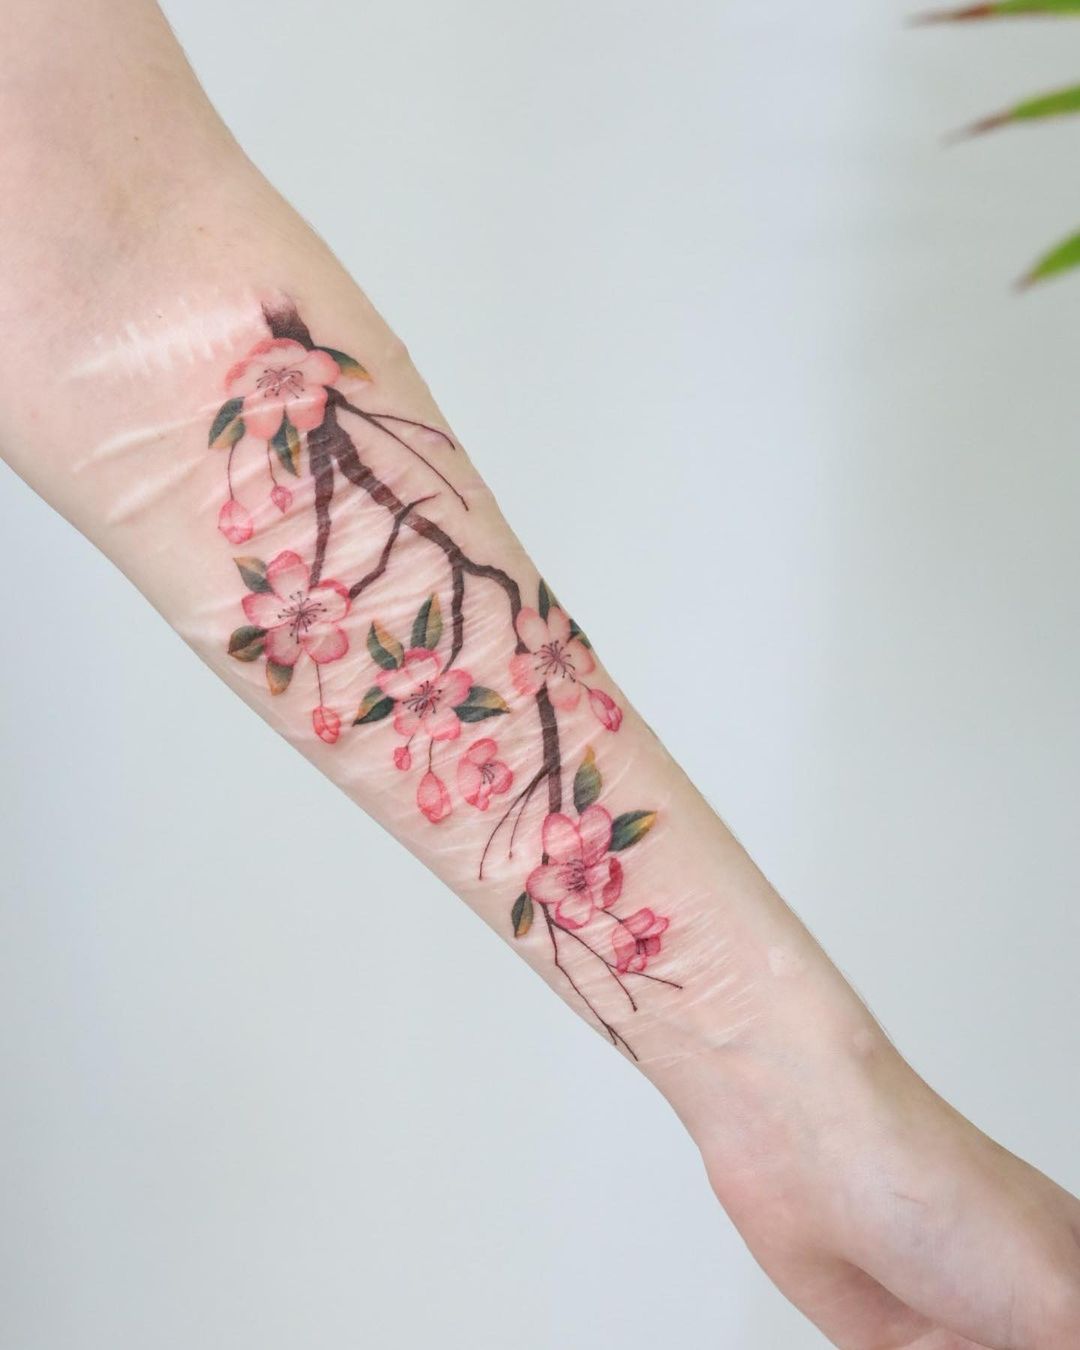 Inkwell Tattoos on Twitter Watercolor cherry blossoms tattooed by Steve  tattoo tattoos inkwell inkwelltattoo ink bodymod bodymodification  art cherryblossomtattoo inkwelltattoos colortattoo watercolortattoo  blossomstattoo flowertattoo 